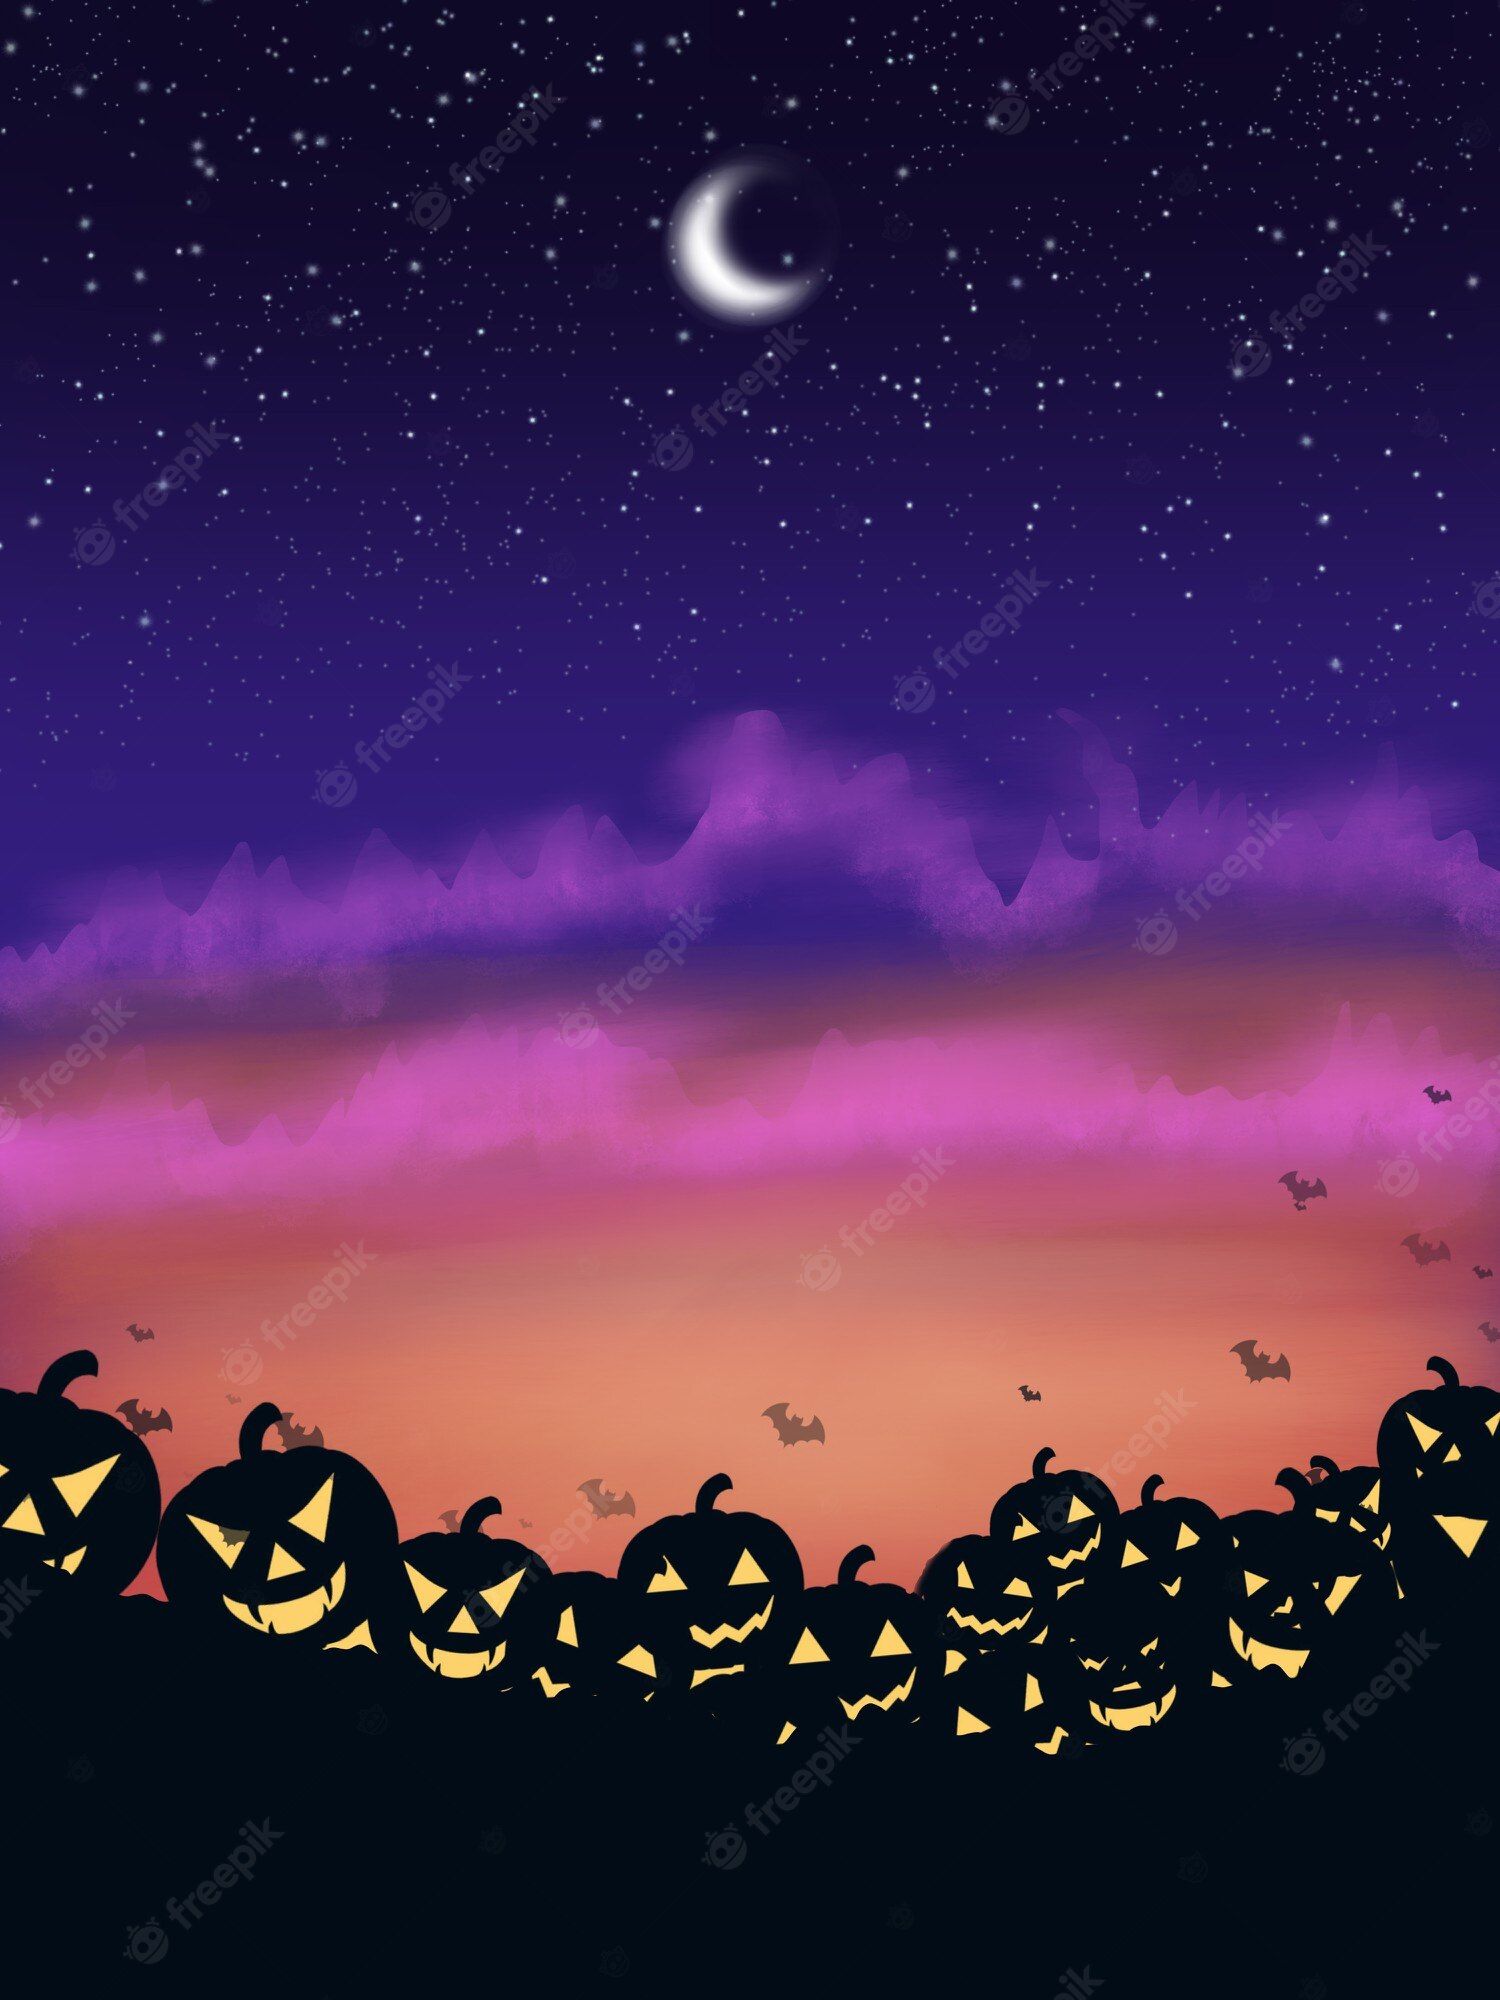 Premium Photo. Scary night helloween with creepy pumpkin wallpaper